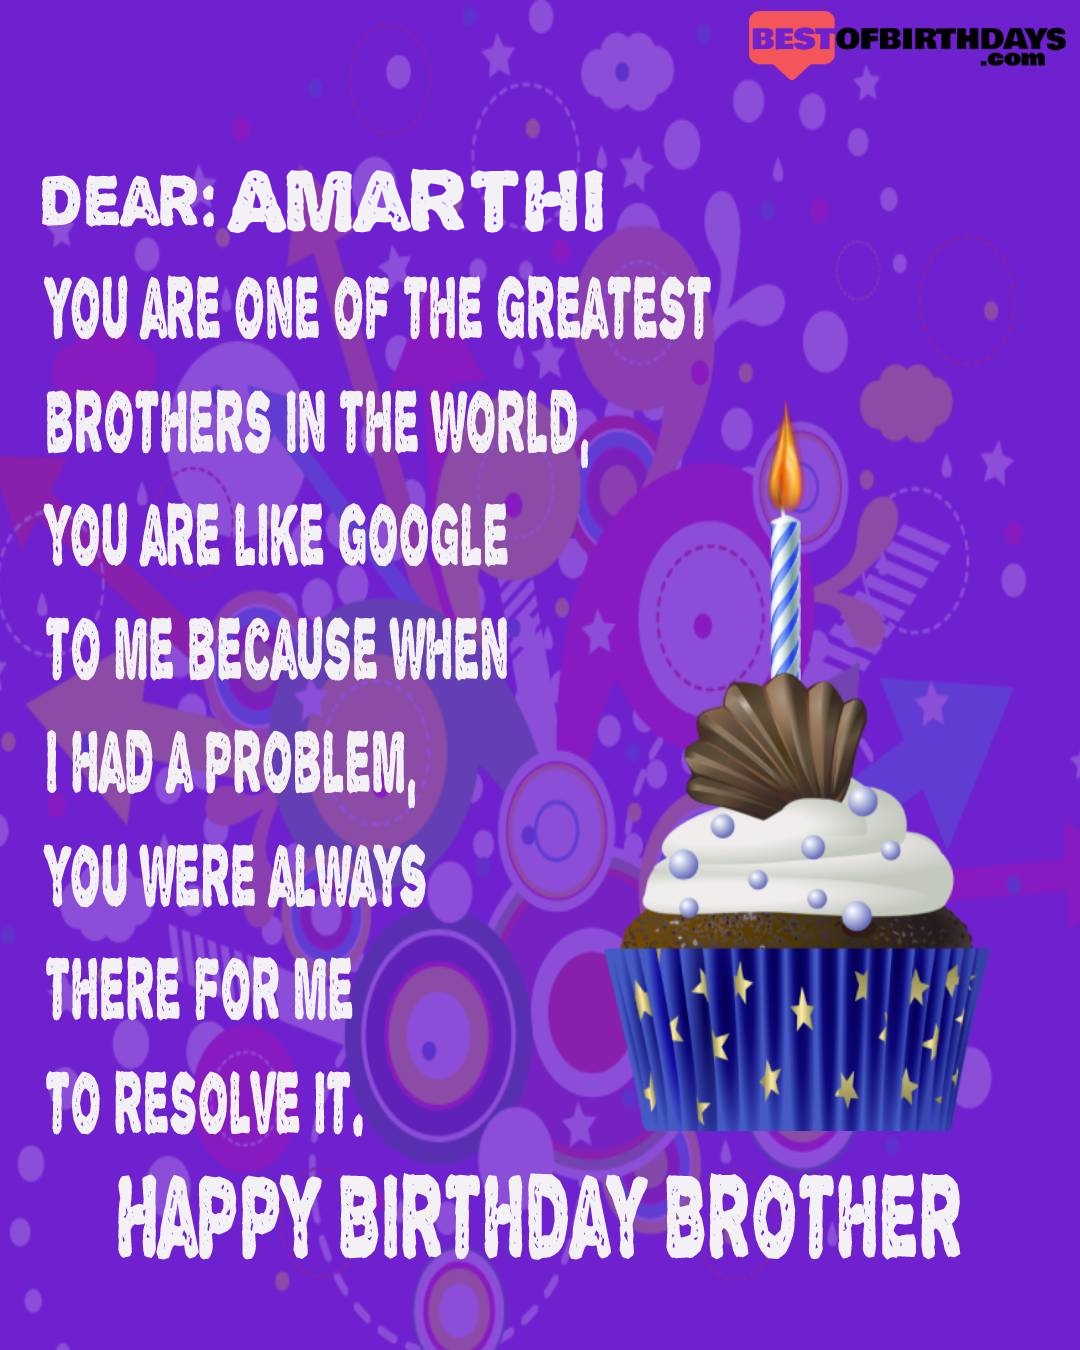 Happy birthday amarthi bhai brother bro